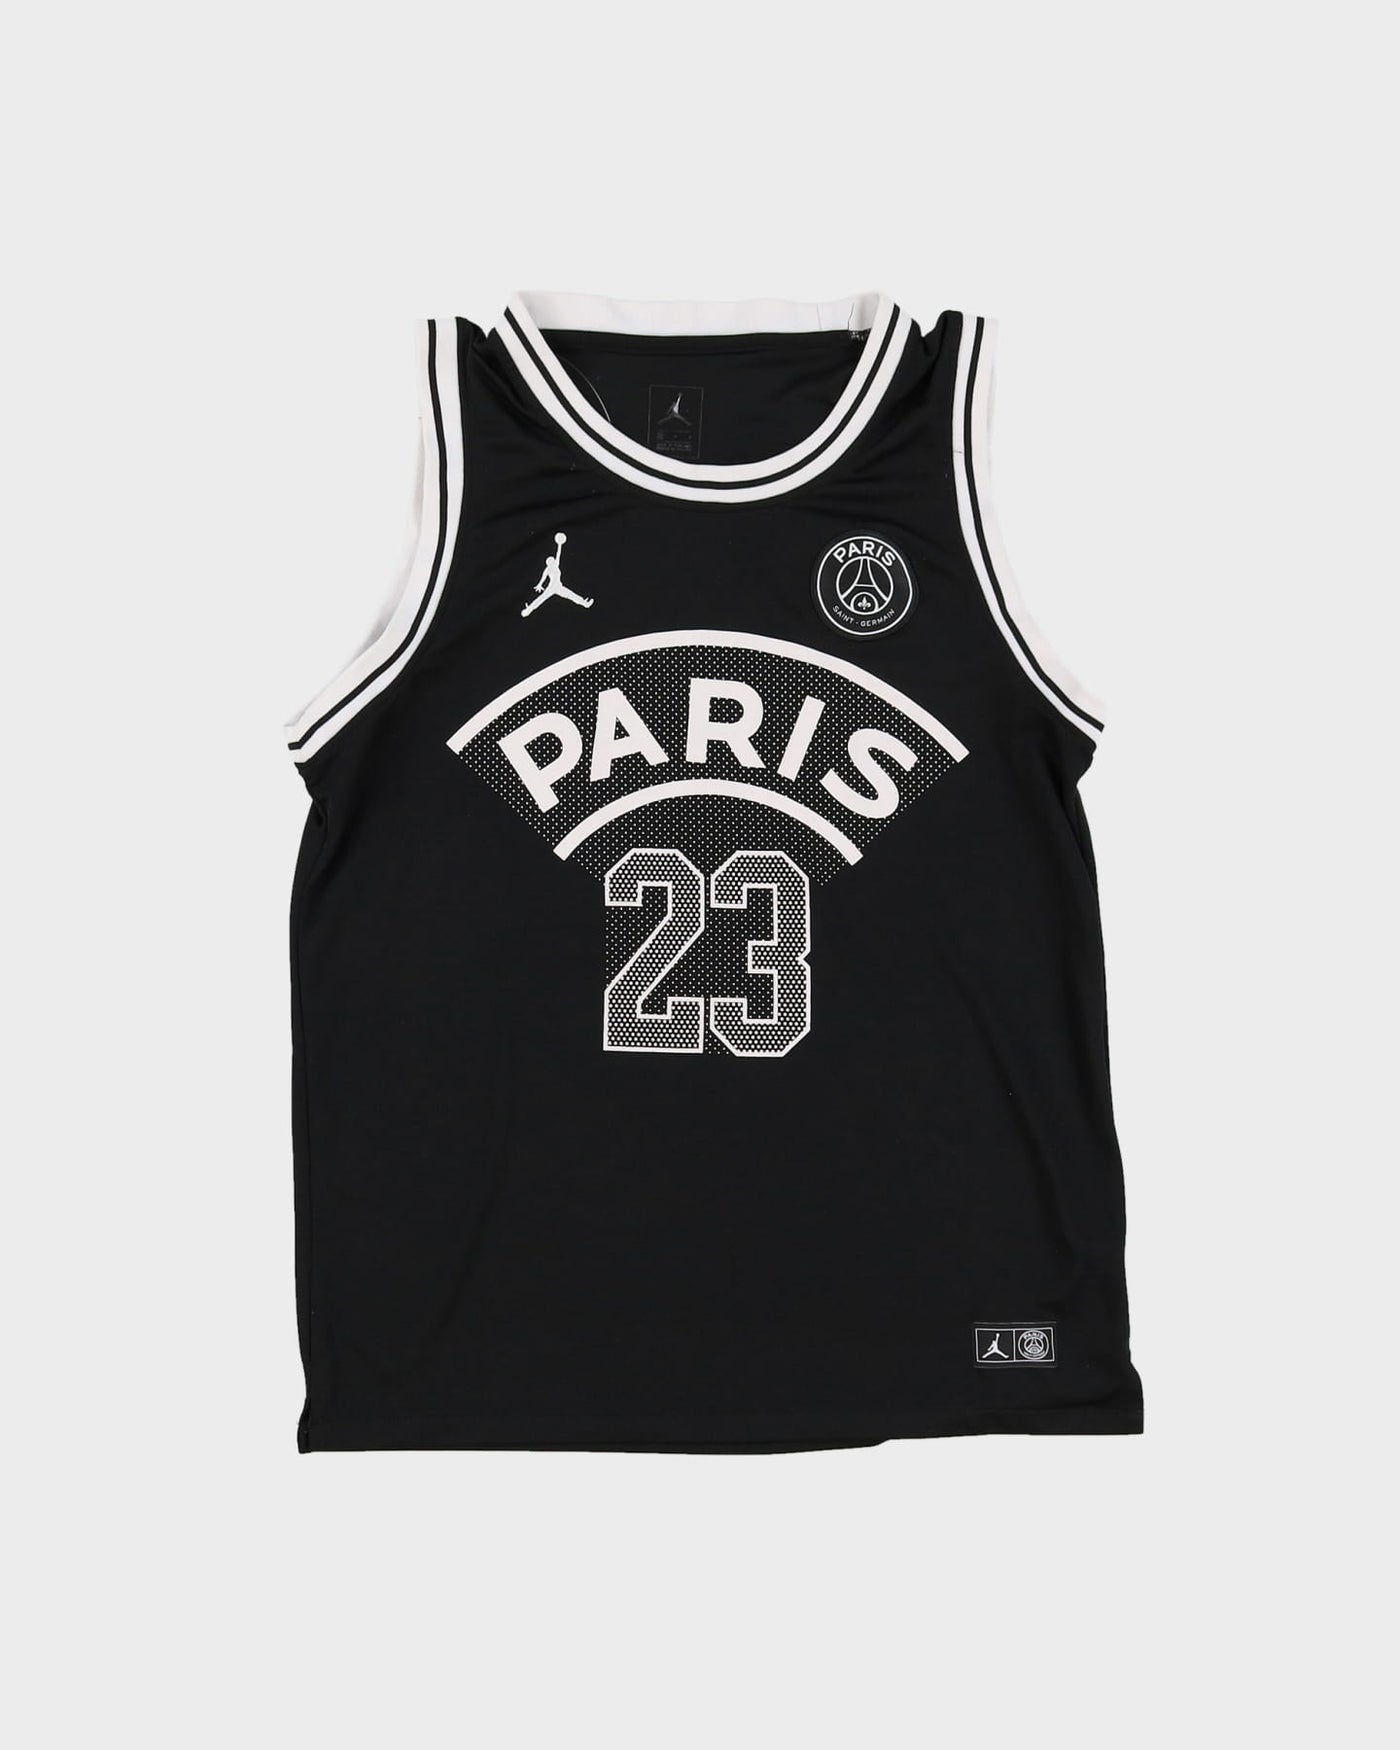 Jordan x psg camiseta de baloncesto negra - s - Rokit